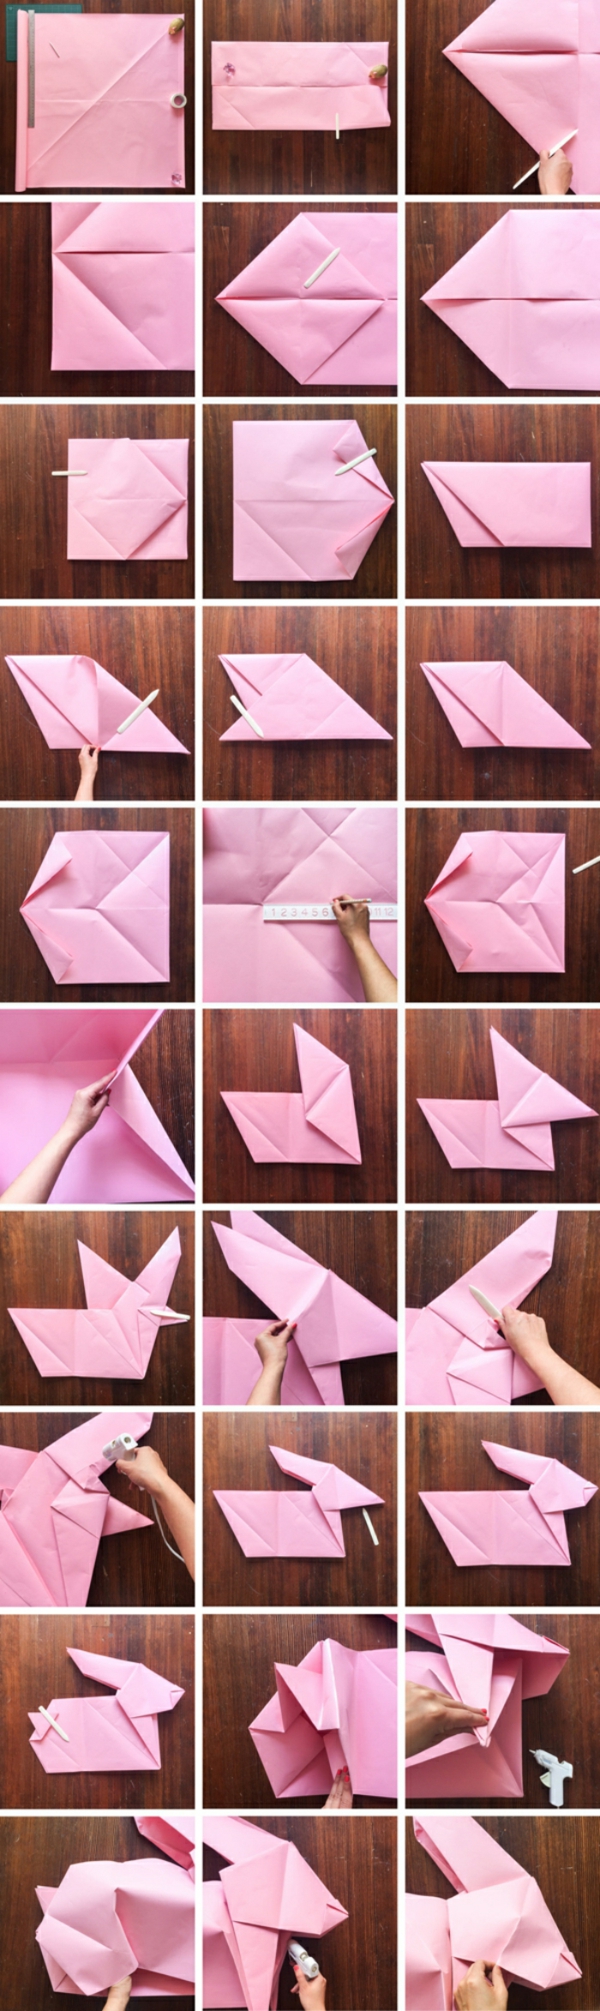 lapin de pâques origami diy technique